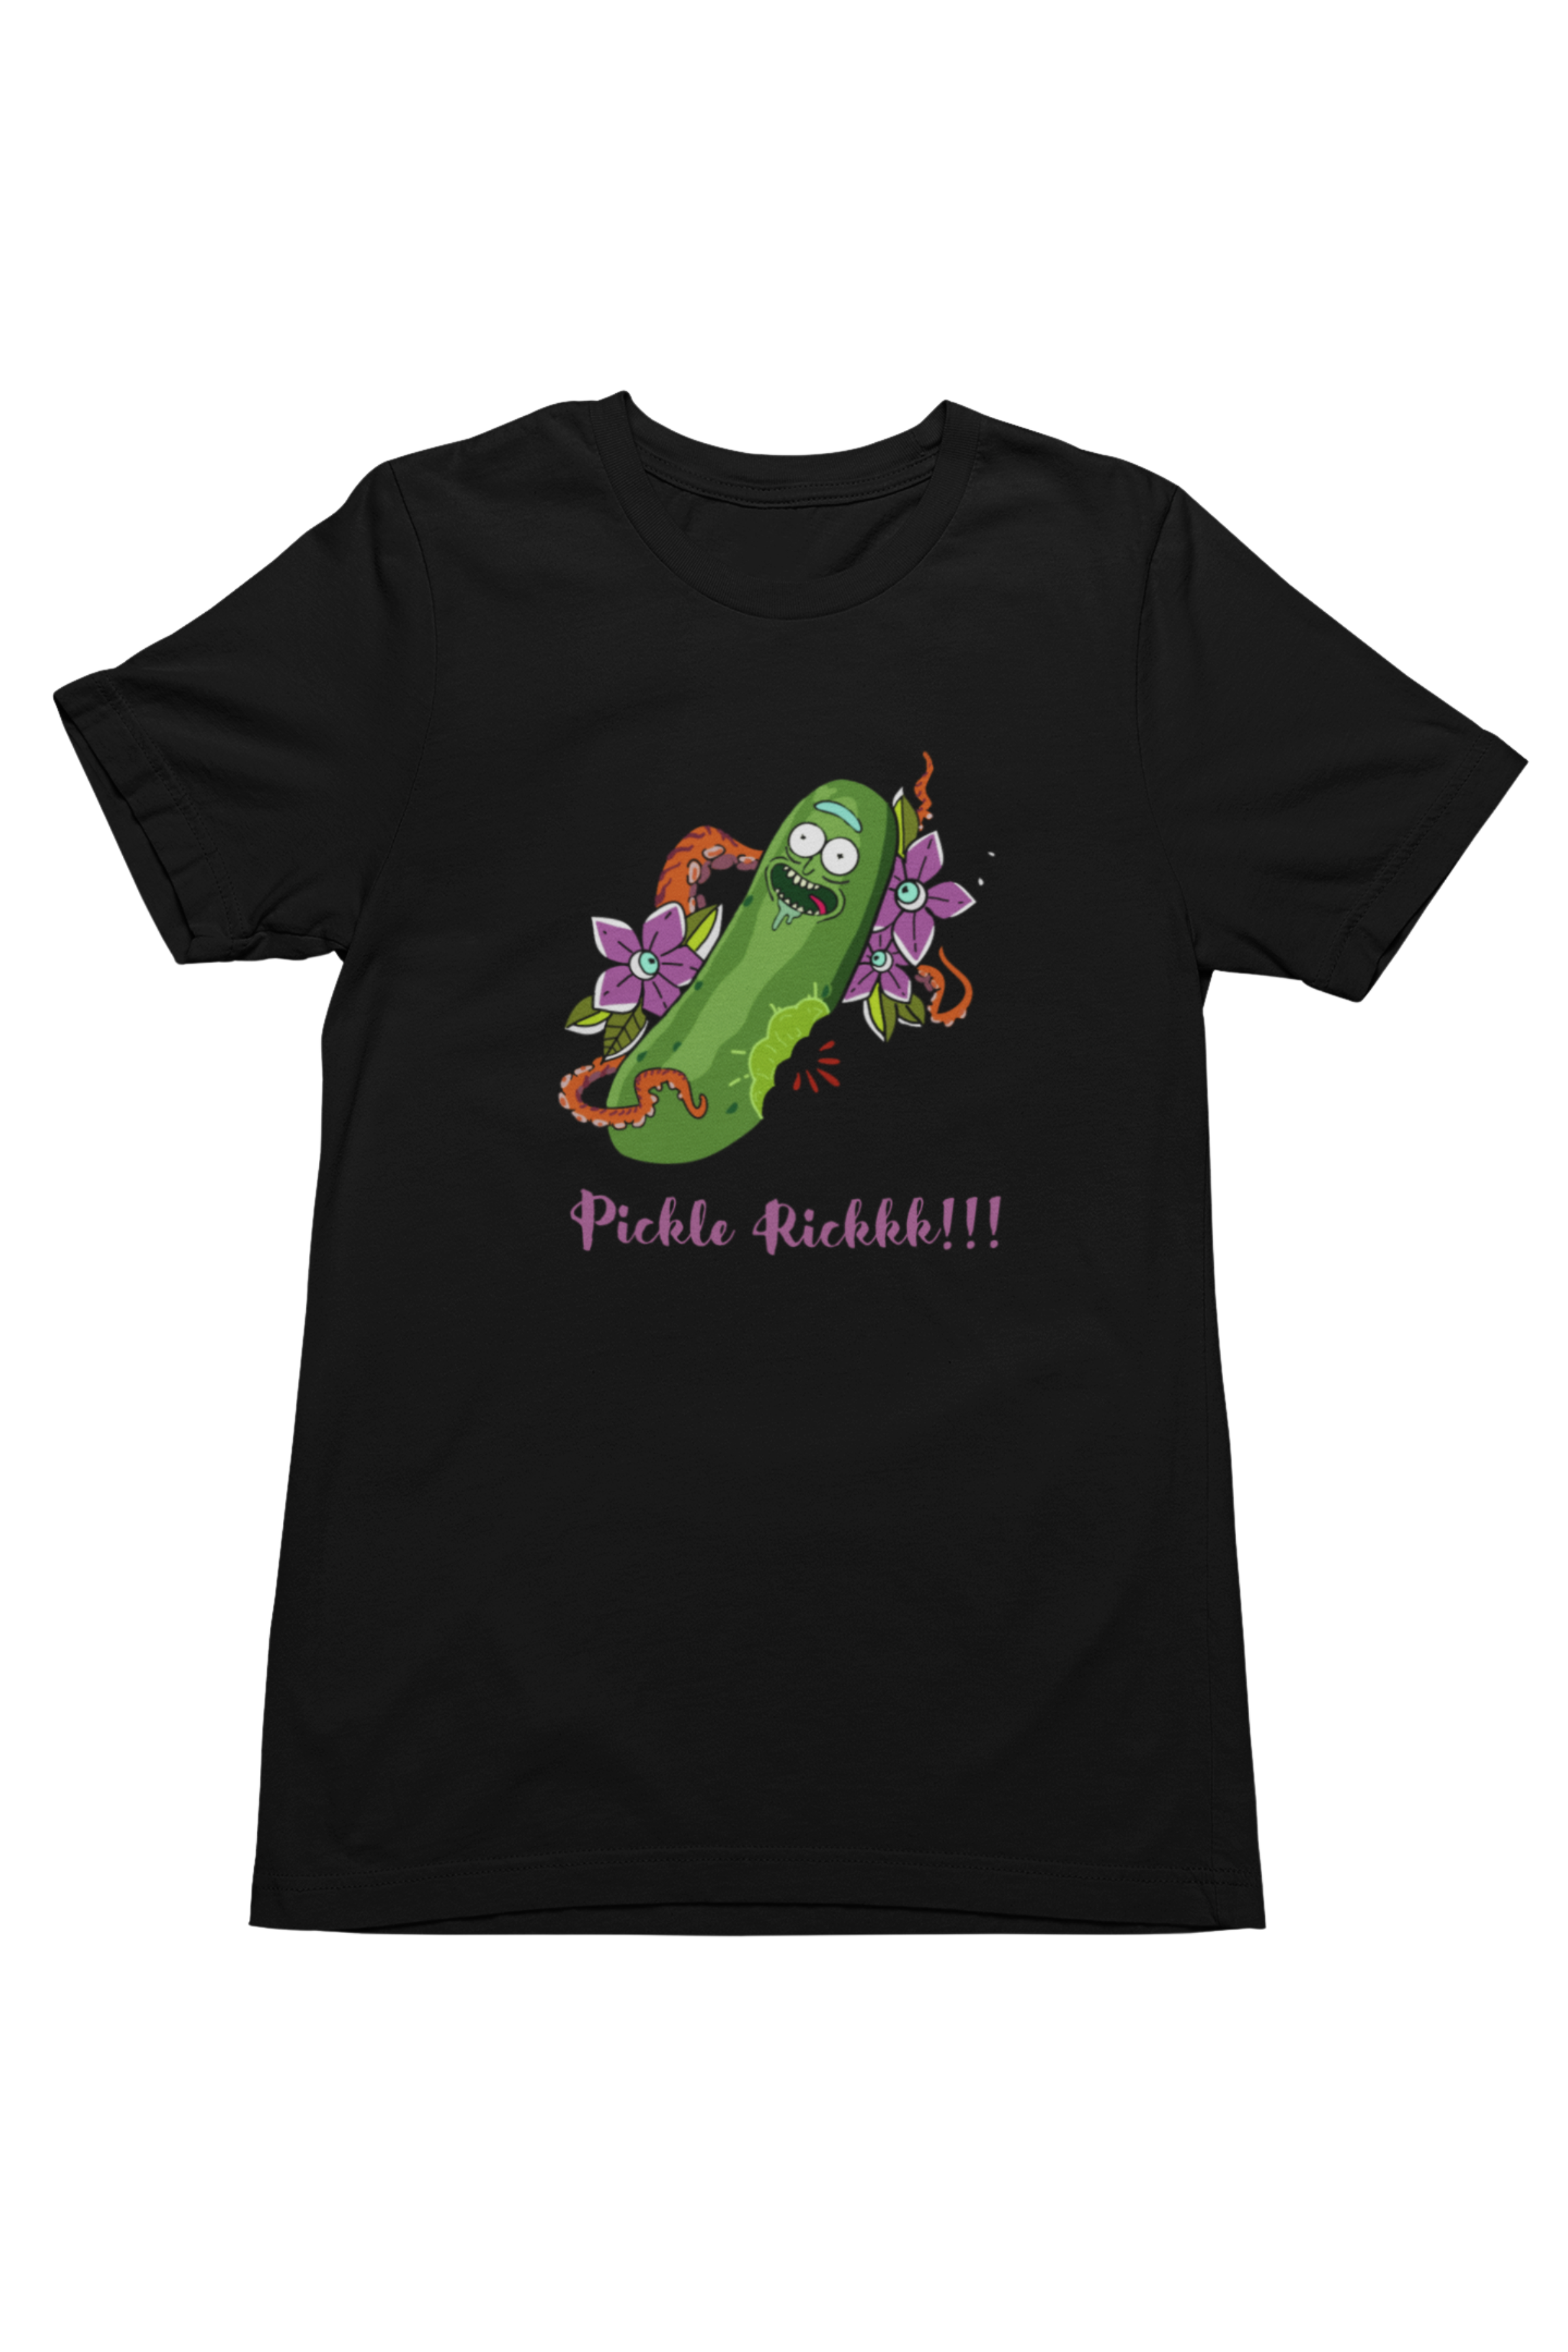 Pickle Rickkk!!! | Premium Unisex T-Shirt